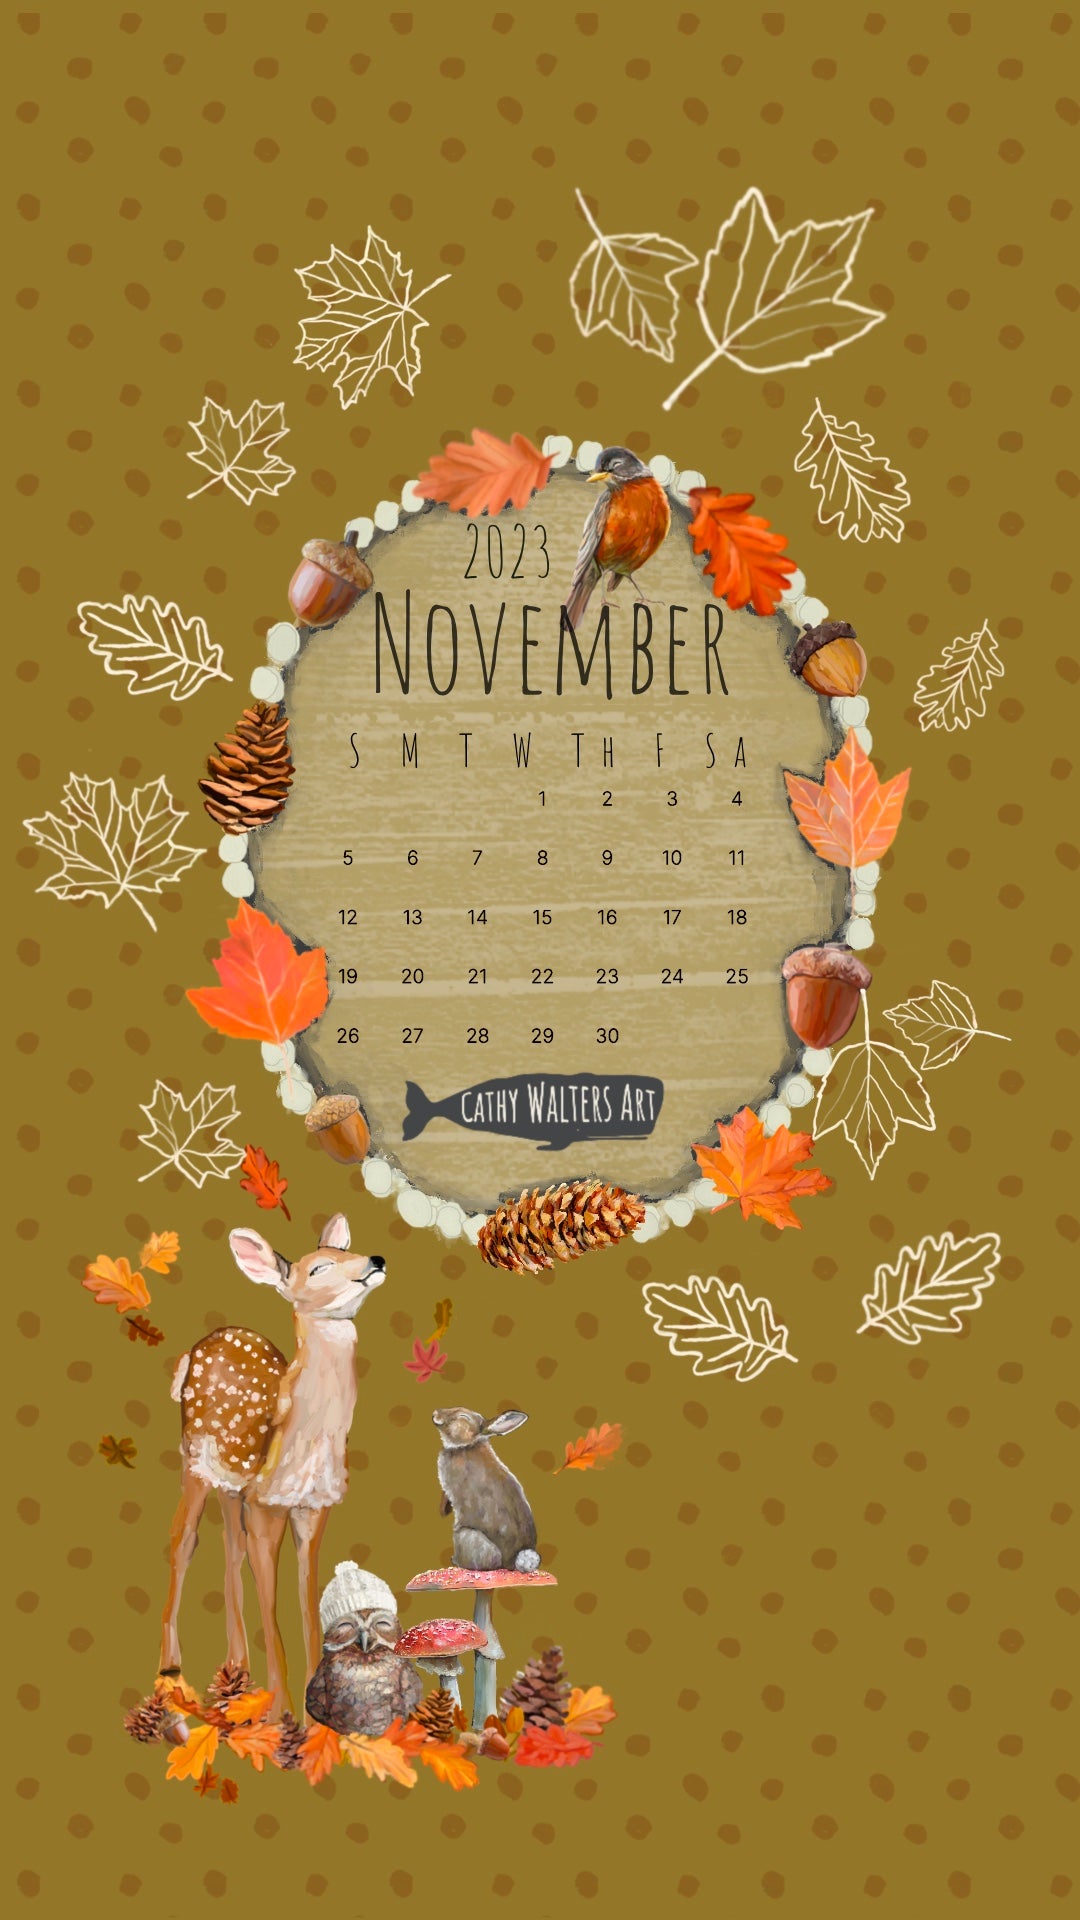 November Wallpaper is here!